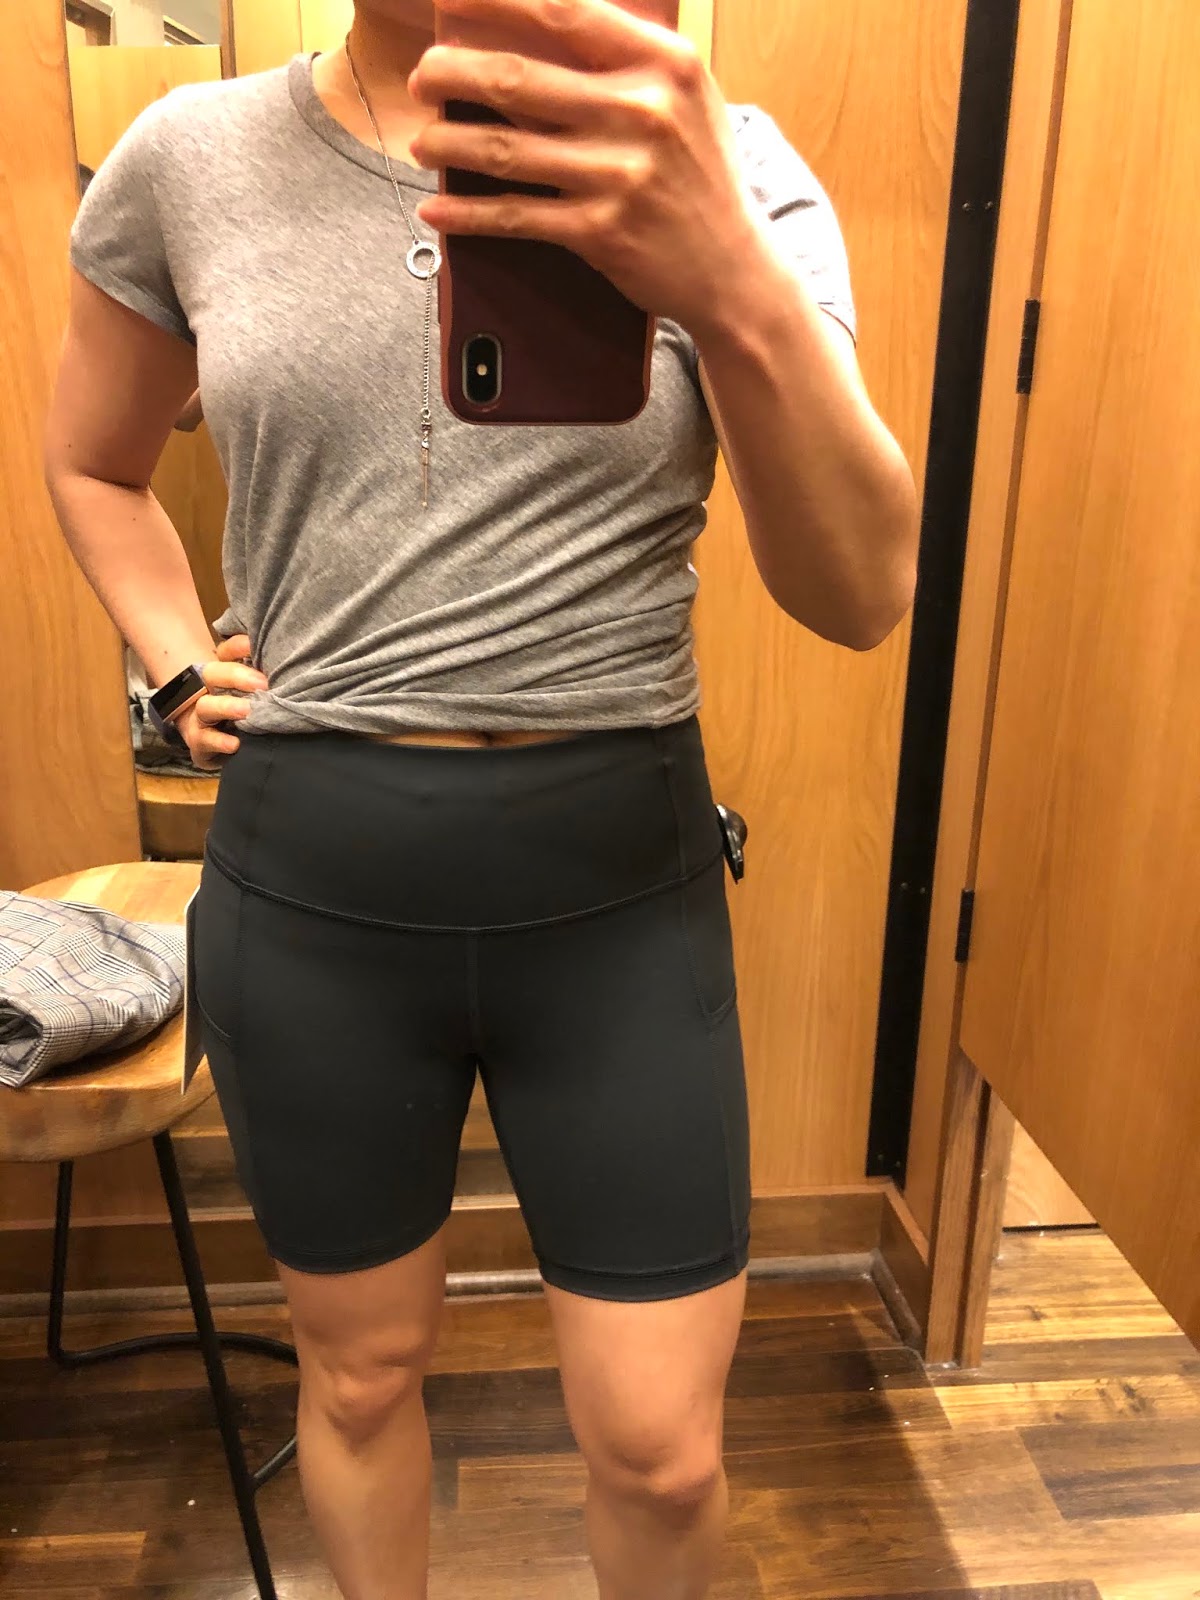 align shorts 6 inch